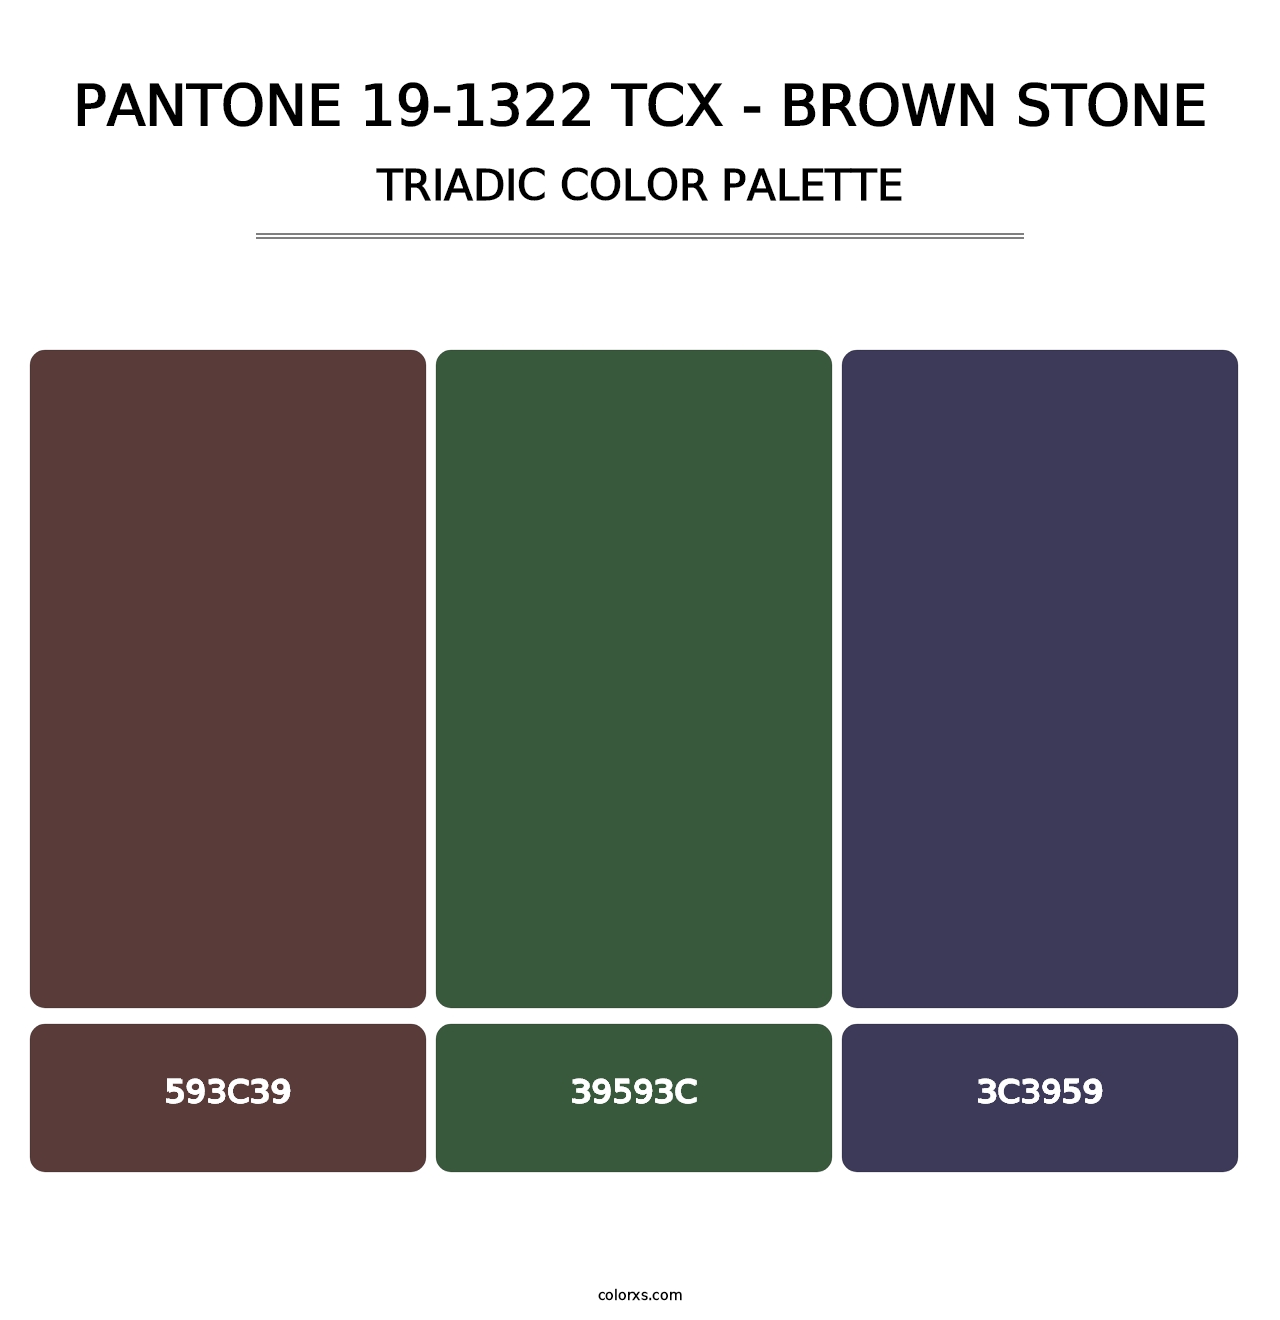 PANTONE 19-1322 TCX - Brown Stone - Triadic Color Palette